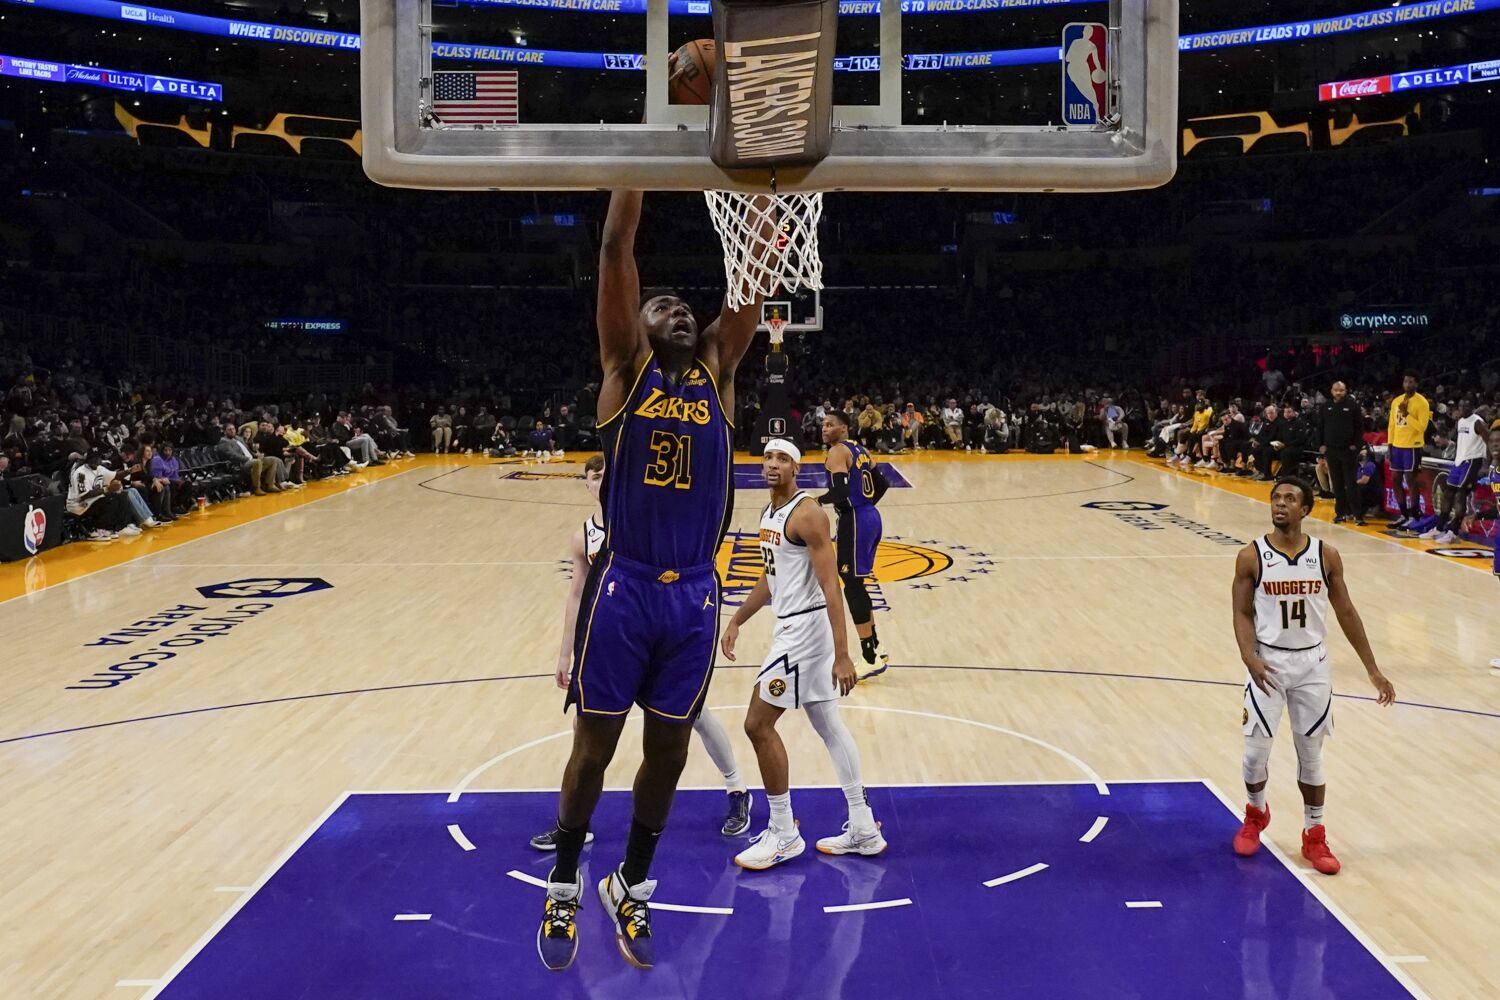 Elliott: With Anthony Davis injured, Lakers need to show same determination as Thomas Bryant